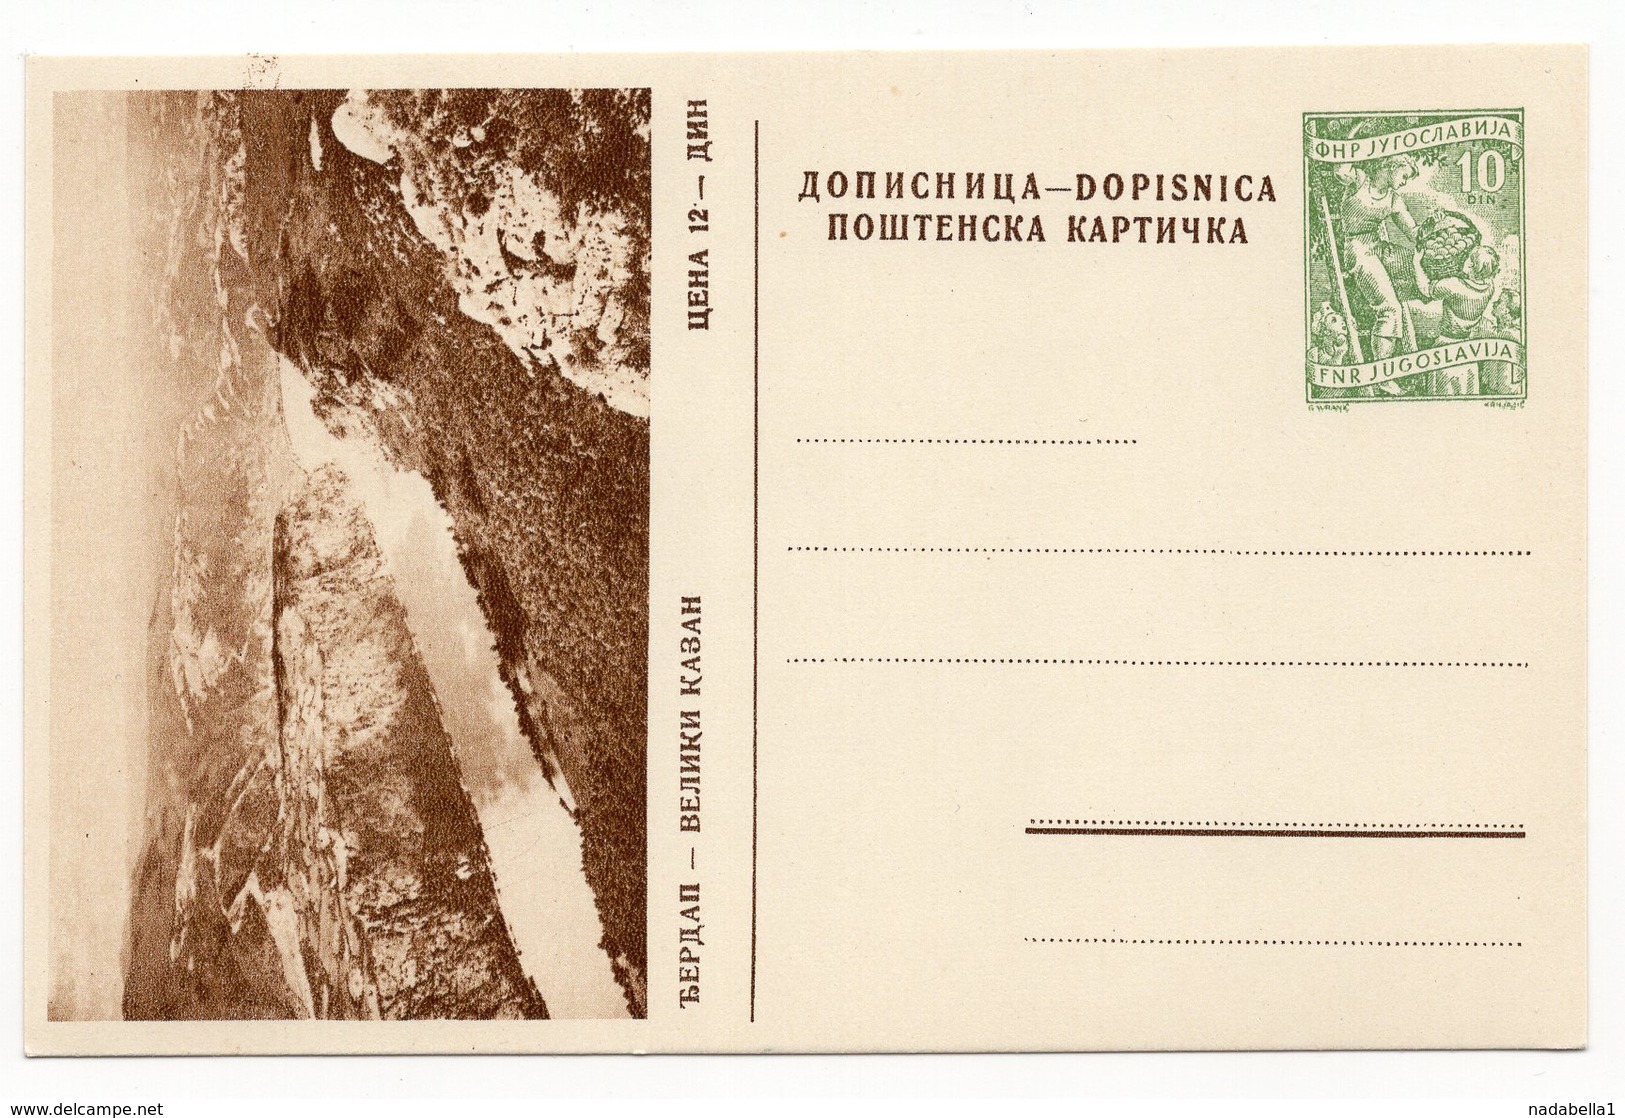 1956, YUGOSLAVIA, DJERDAP-VELIKI KAZAN, DANUBE GORGE, SERBIA, 10 DINARA GREEN, ILLUSTRATED STATIONERY CARD, MINT - Postal Stationery